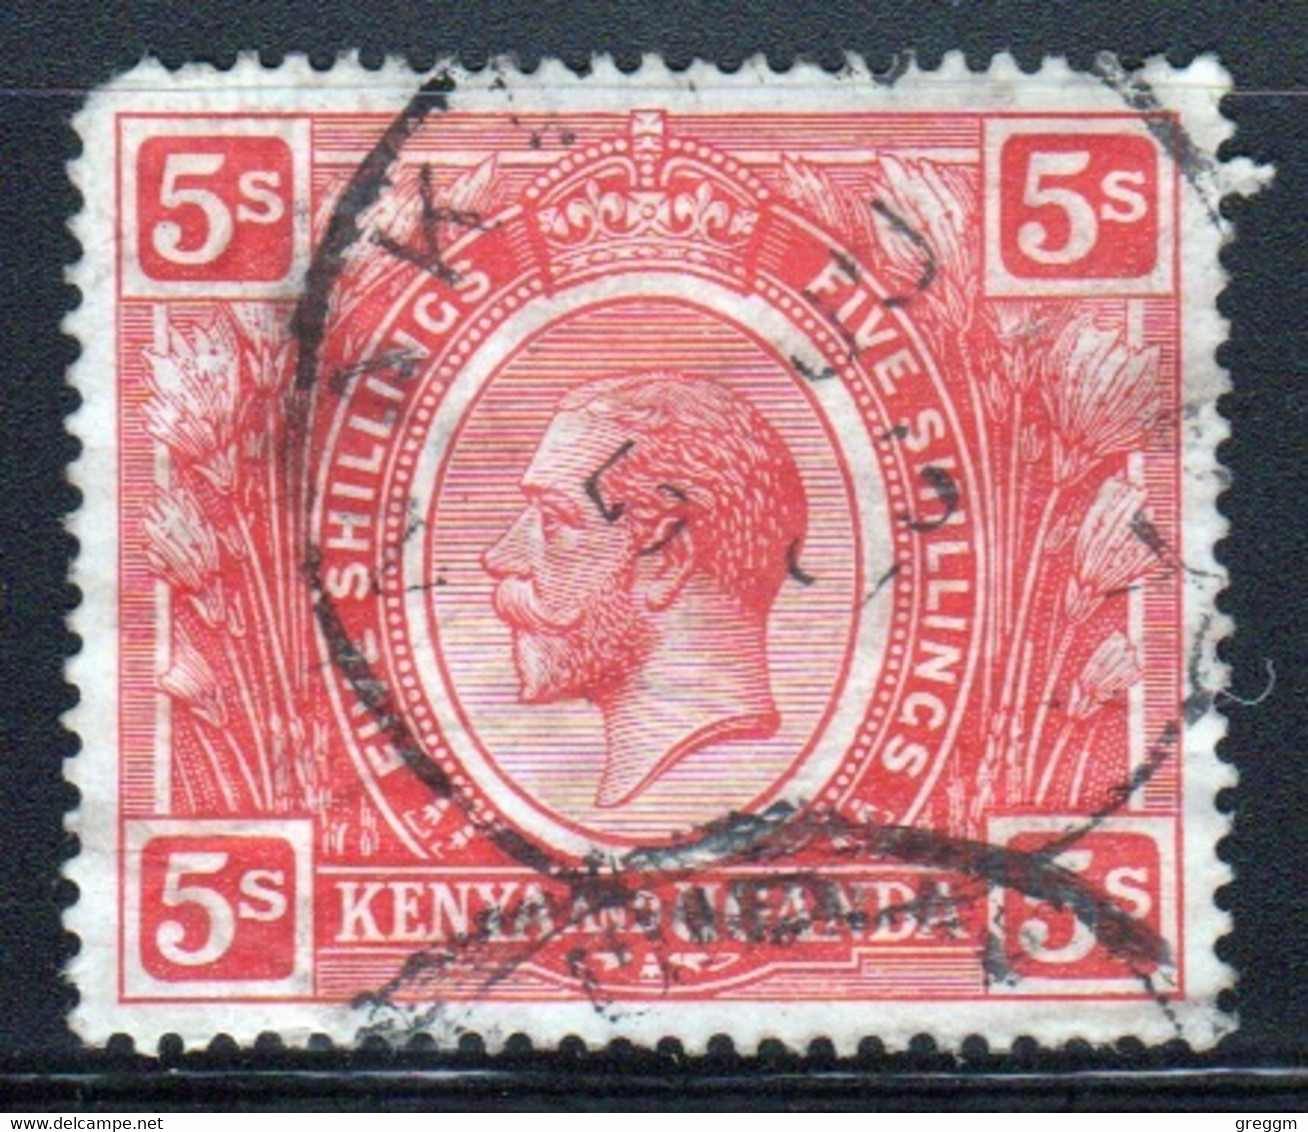 Kenya And Uganda 1922 King George V Five Shilling In Fine Used Condition. - Kenya & Uganda